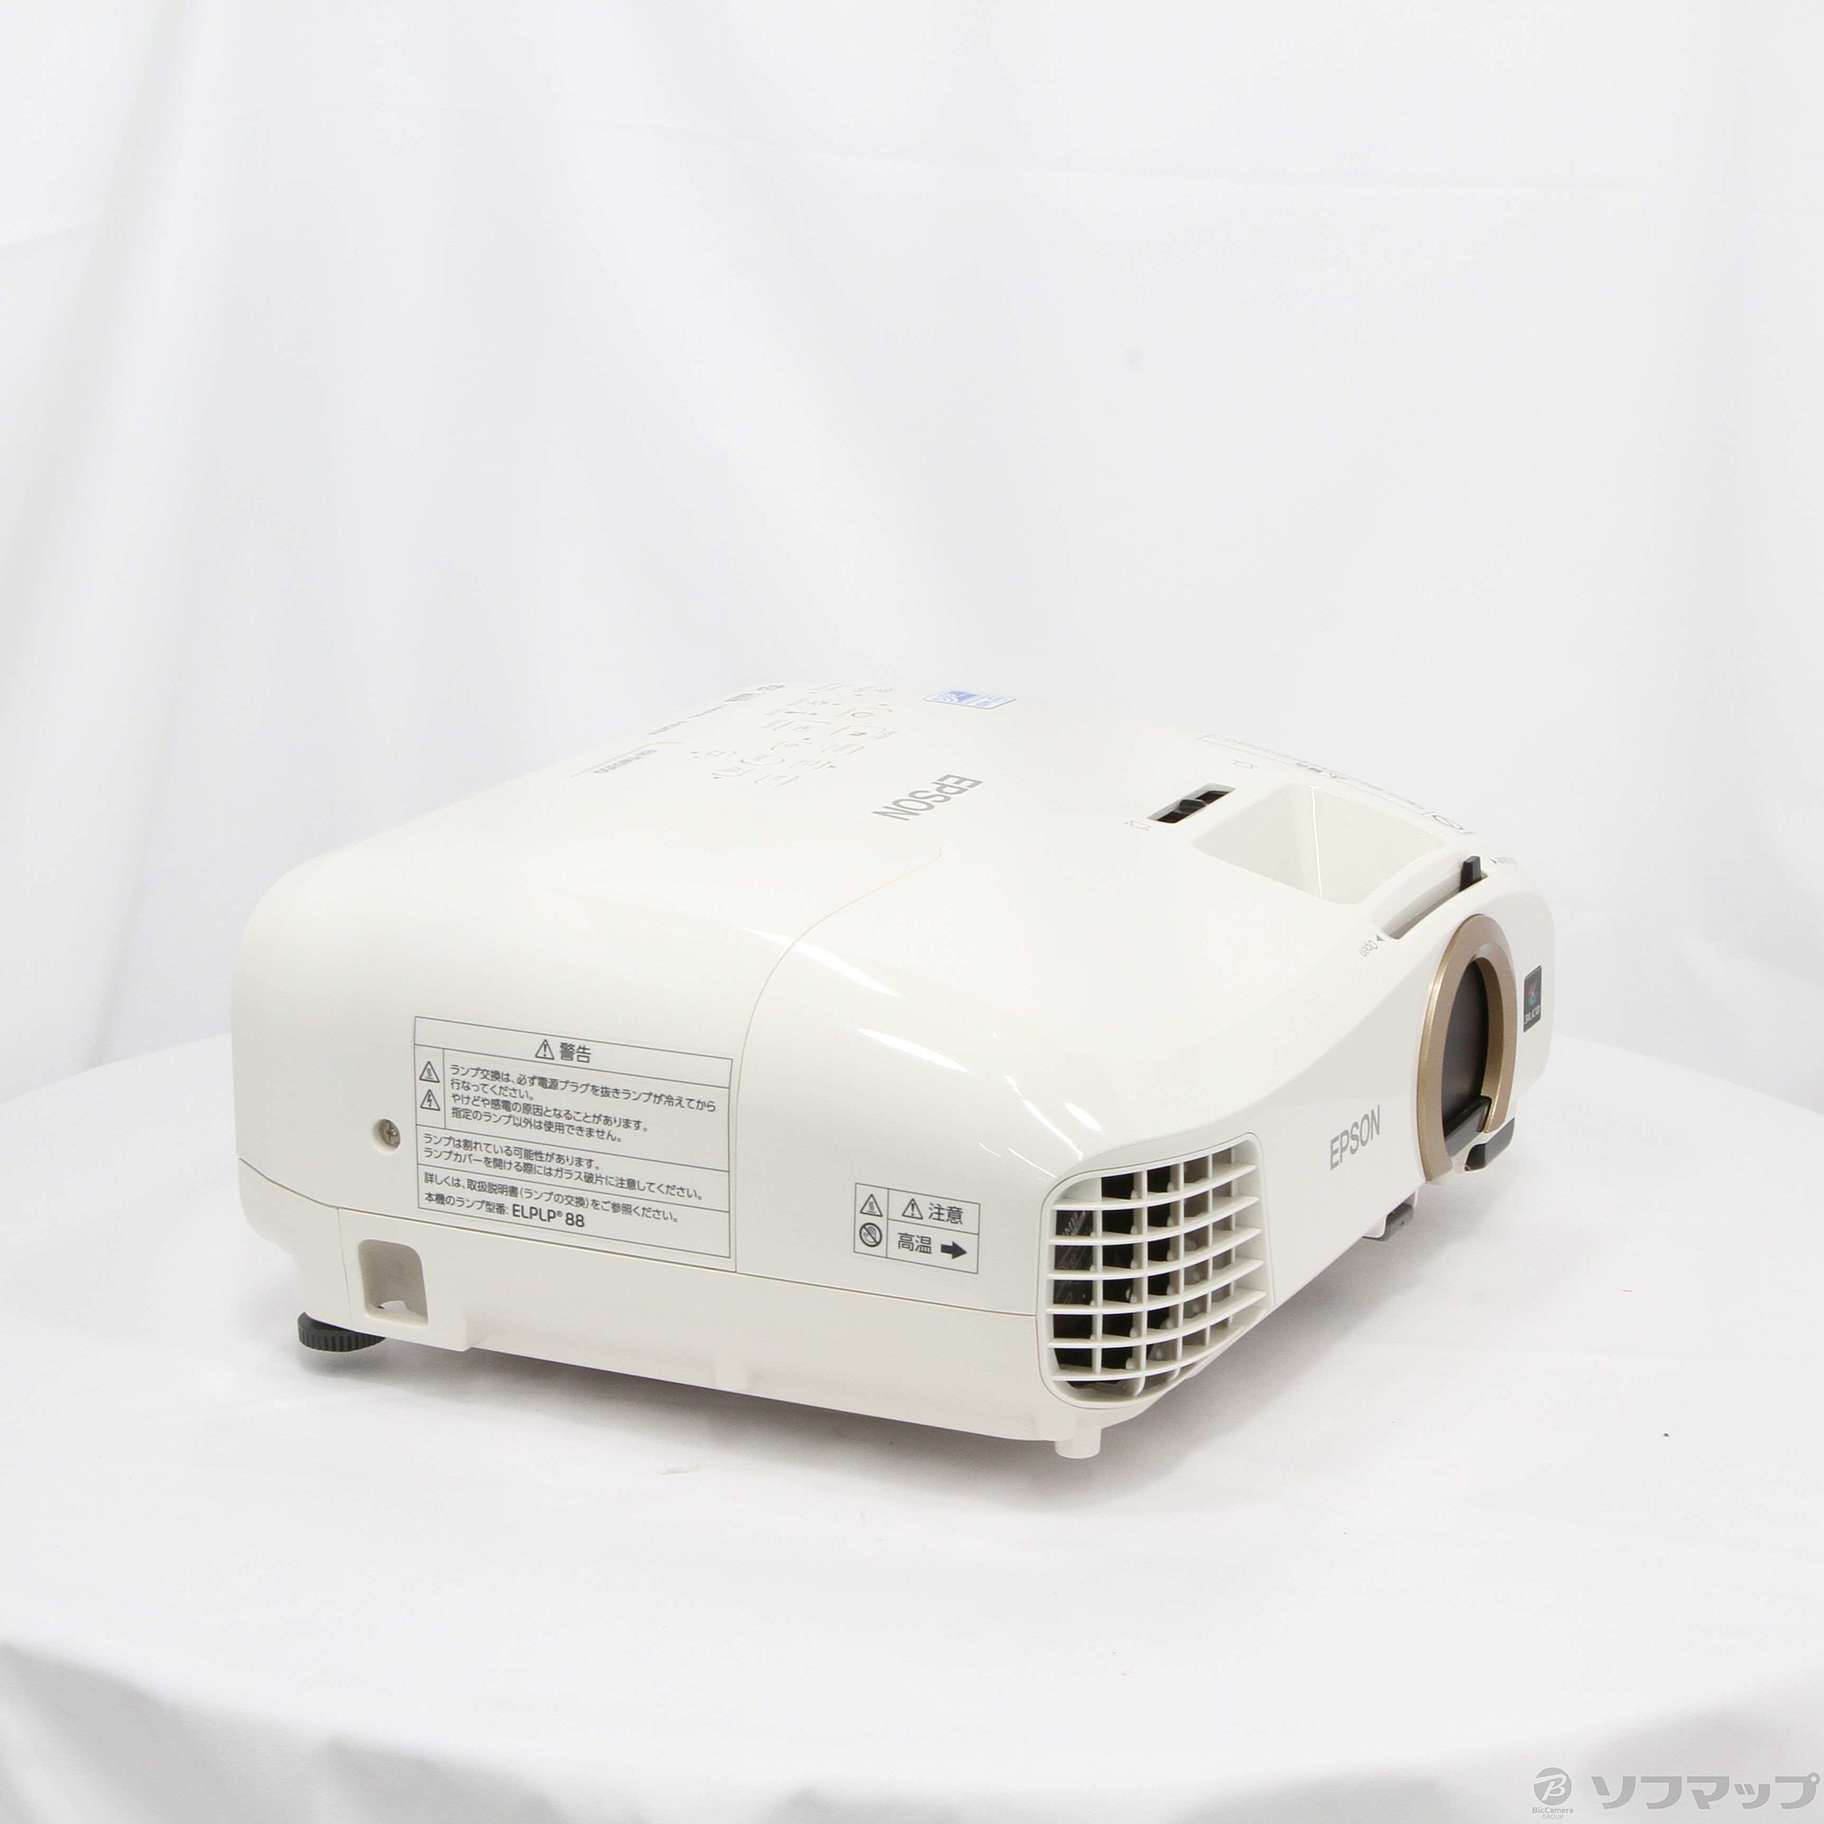 EPSON プロジェクター交換用ランプ ELPLP88 - テレビ、映像機器